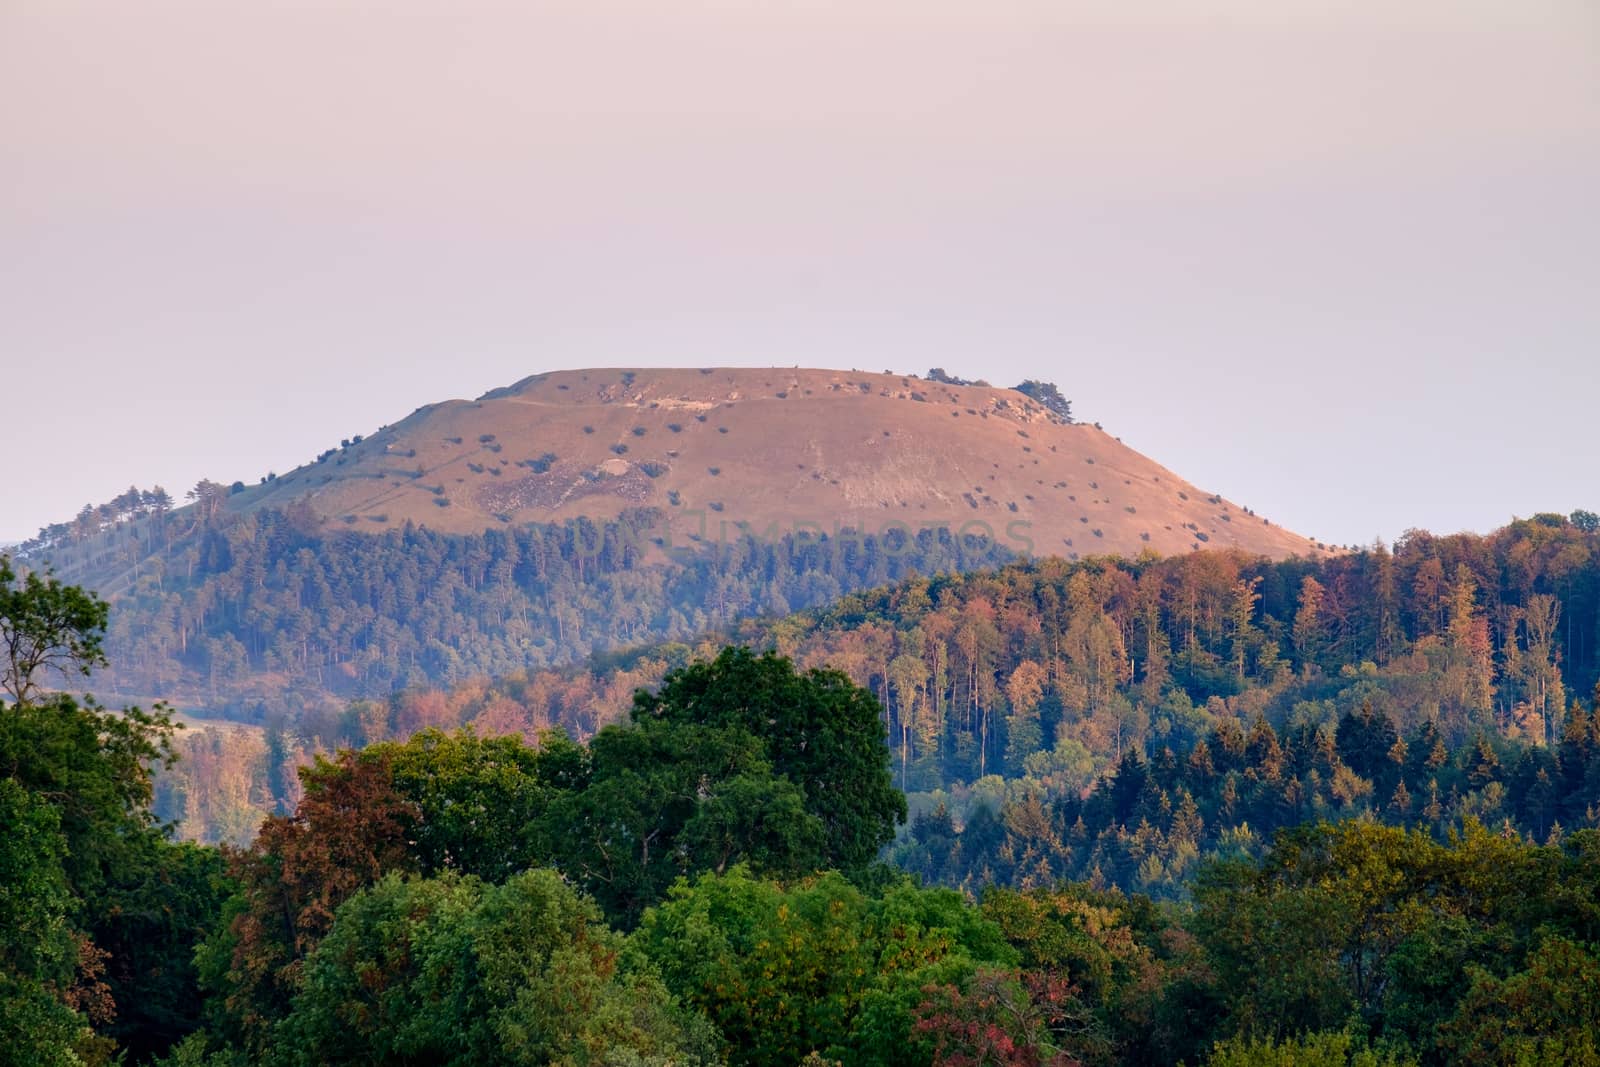 The famous hill Ipf near town Bopfingen by w20er